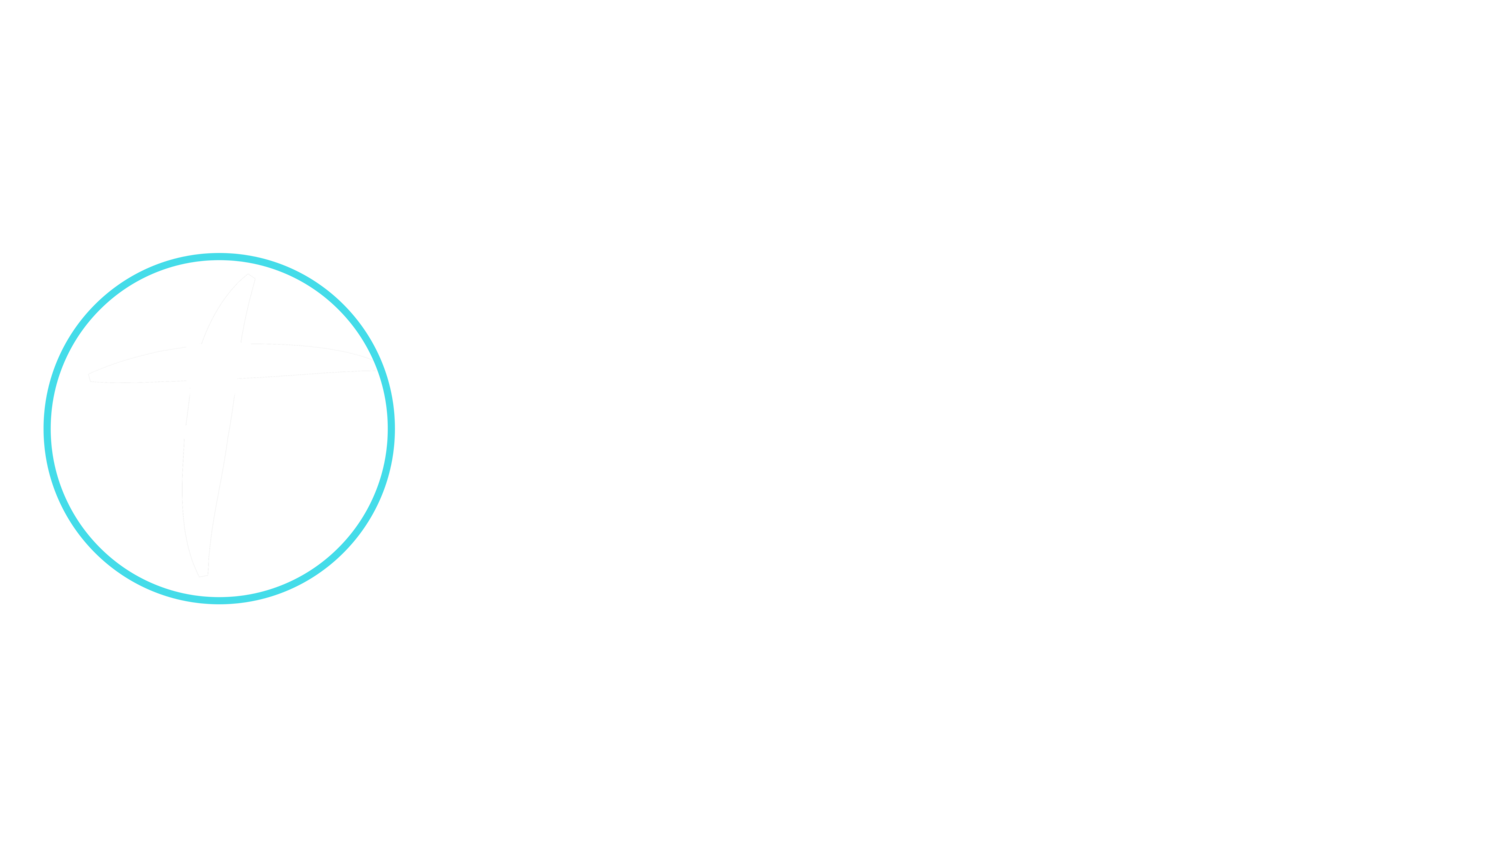 CrossPoint Wesleyan Church